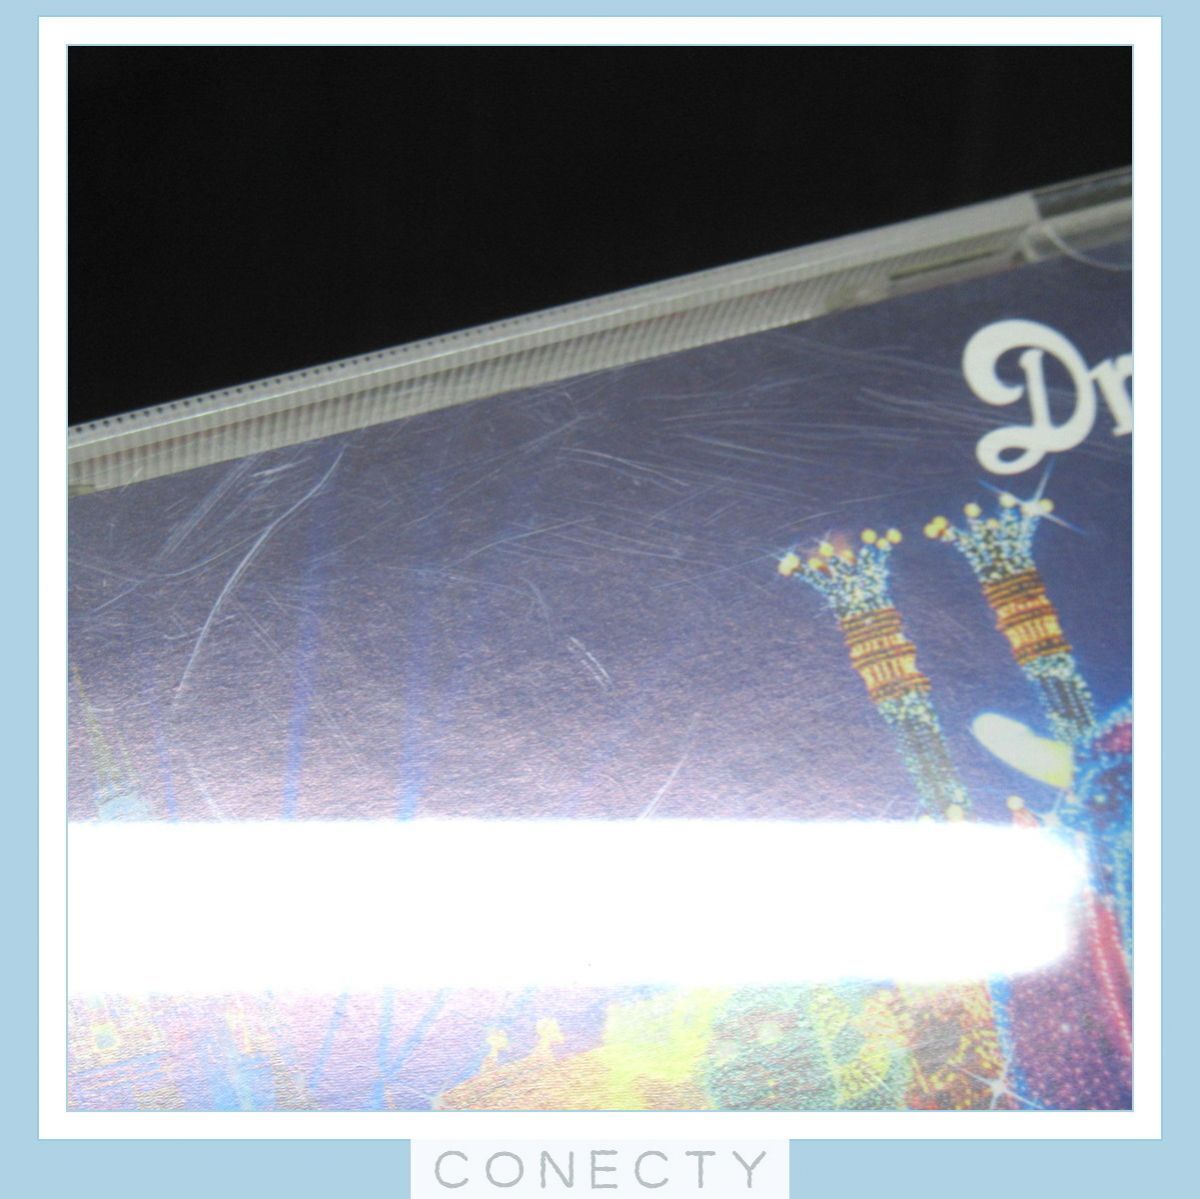 CD Tokyo Disney resort music * collection Dream CD12 sheets set [S2[S2